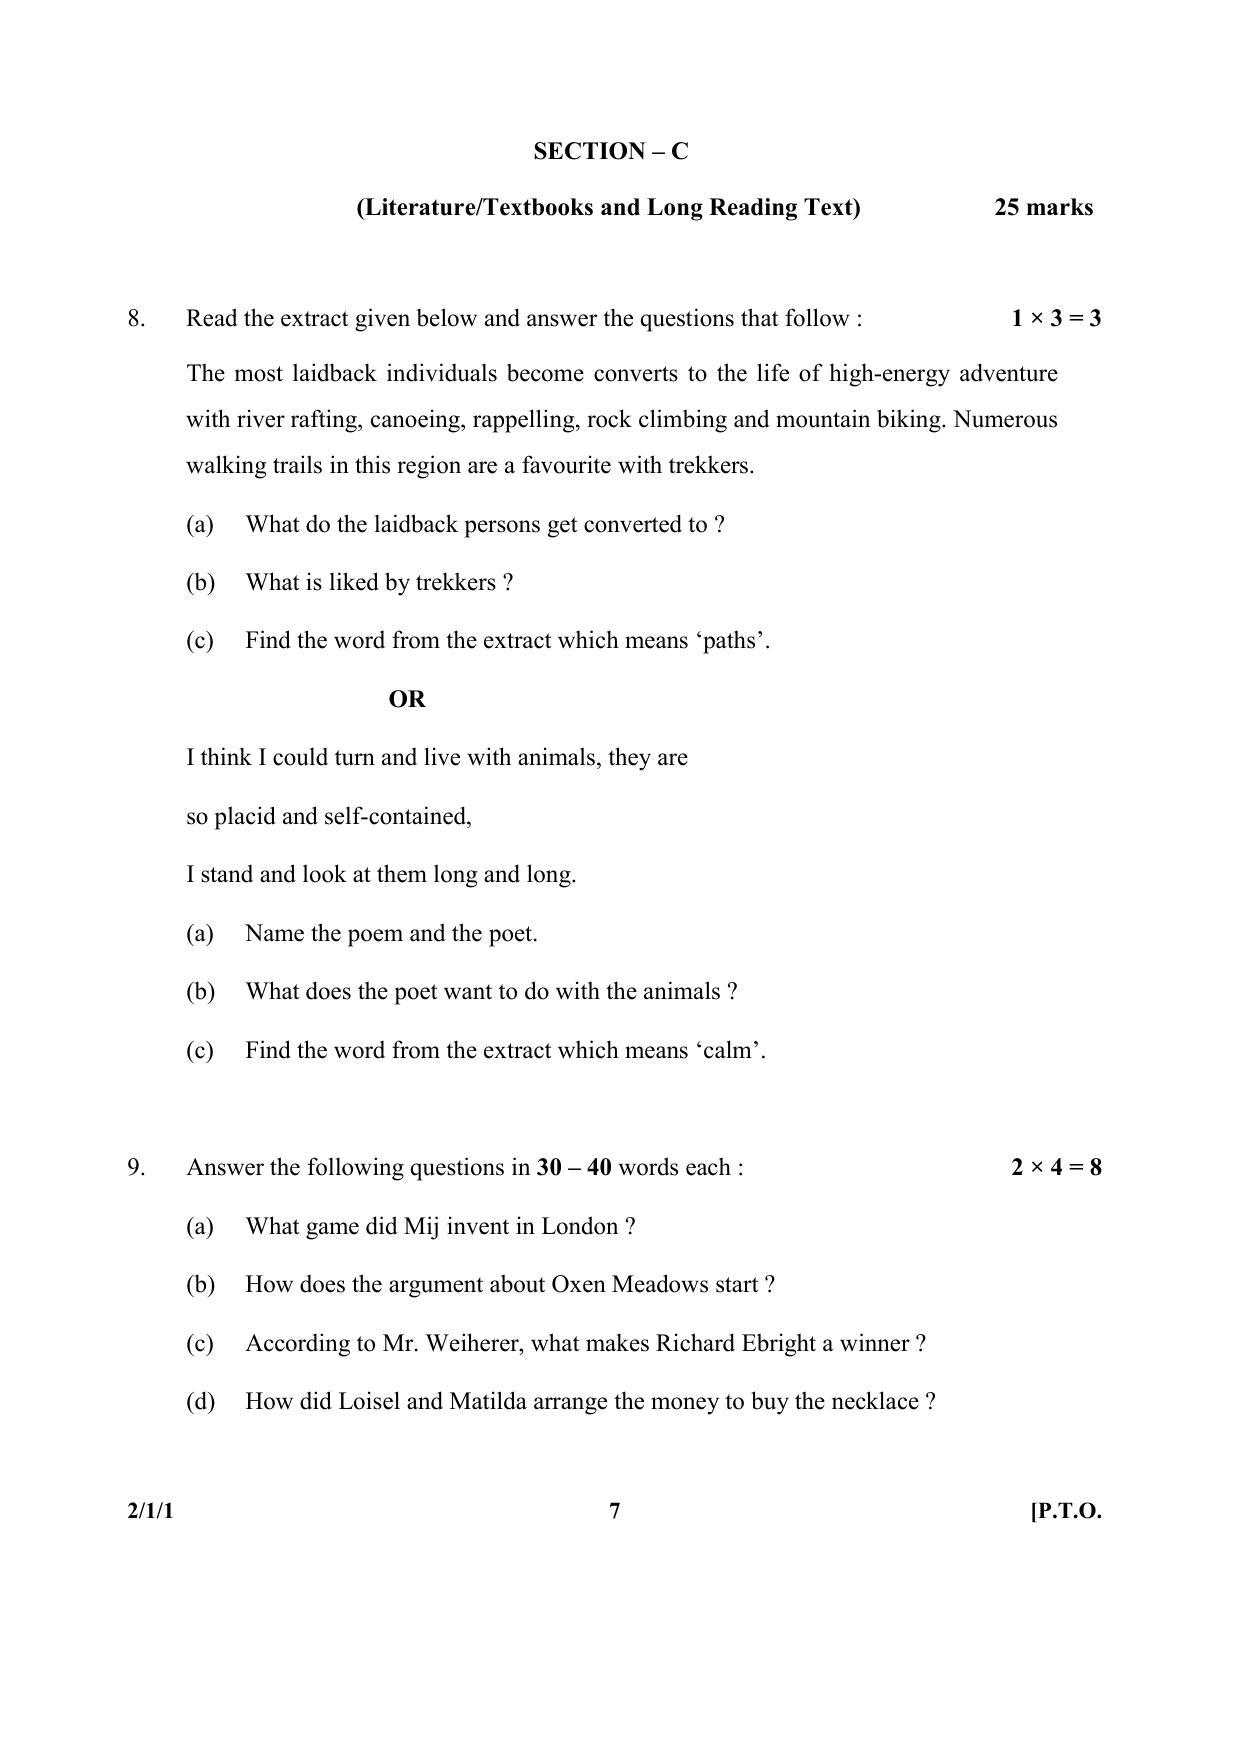 CBSE Class 10 2-1-1 (English Lan. & Lit.) 2017-comptt Question Paper - Page 7